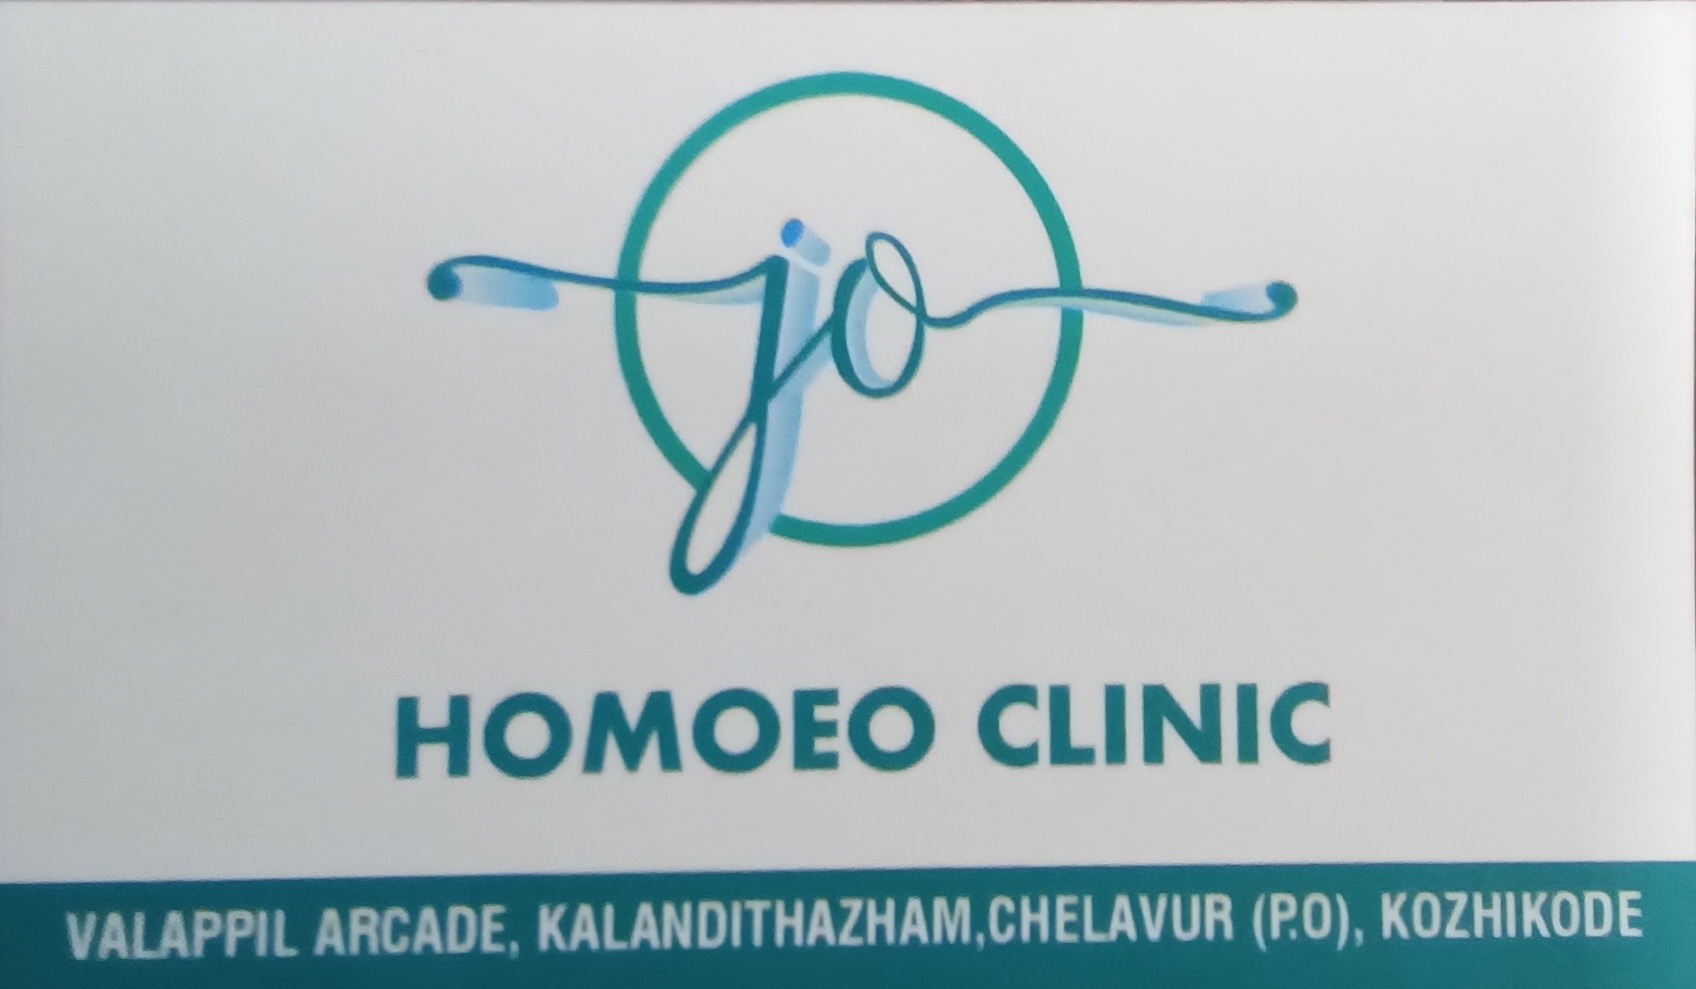 JO HOMOEO CLINIC, HOMEOPATHY HOSPITAL,  service in Chevayoor, Kozhikode